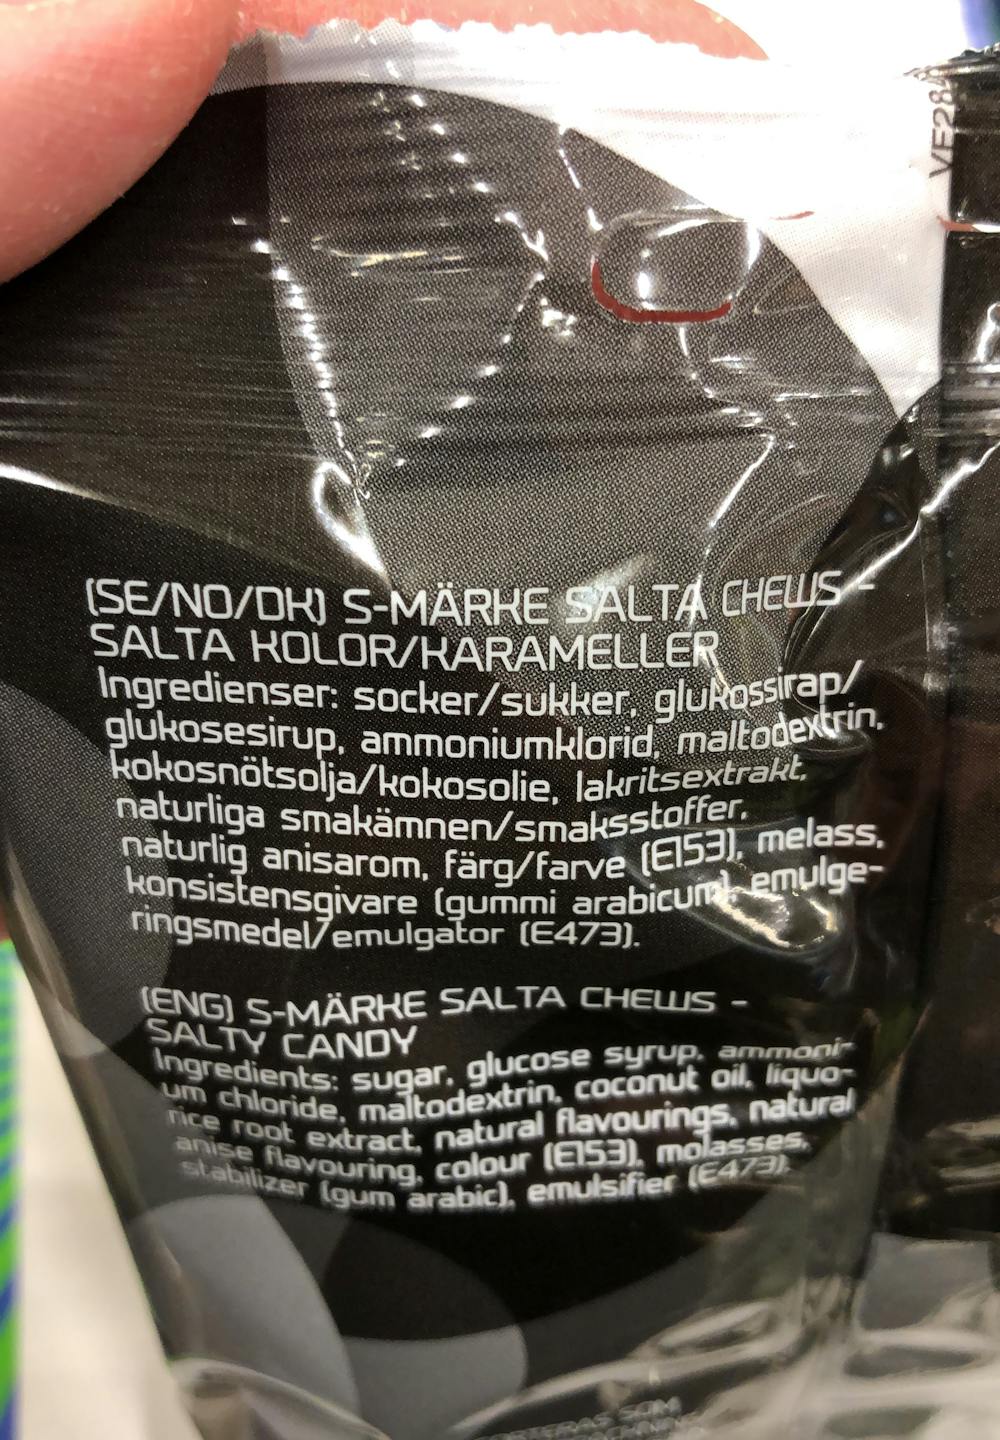 Ingredienslisten til Salta chews, S-märke originalet